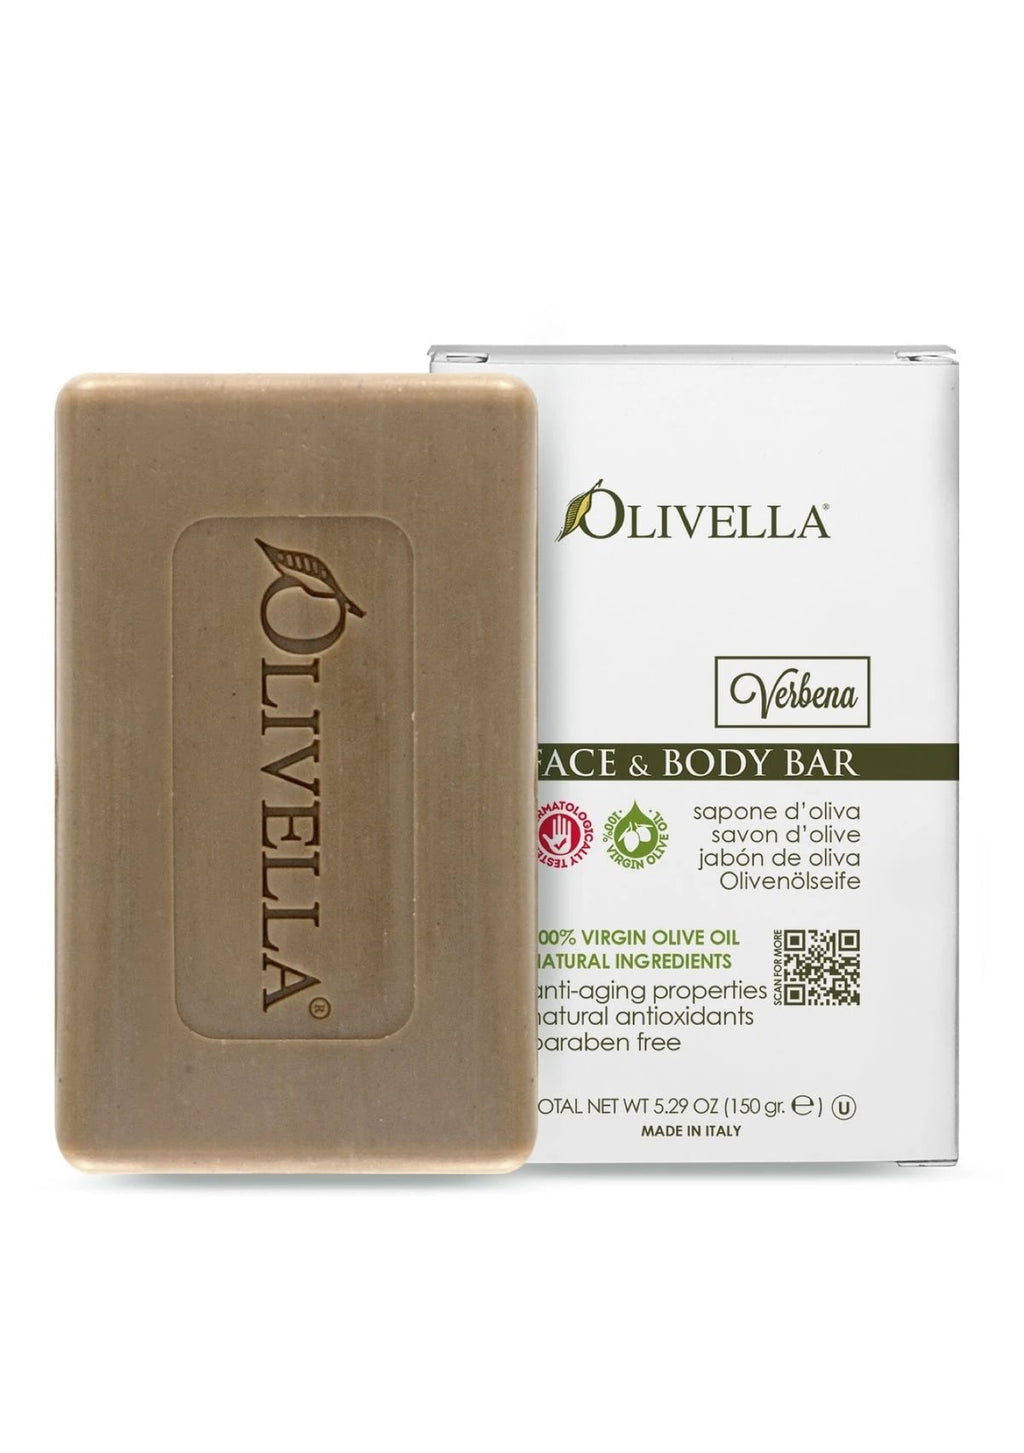 Olivella Verbena face & body bar, 150g